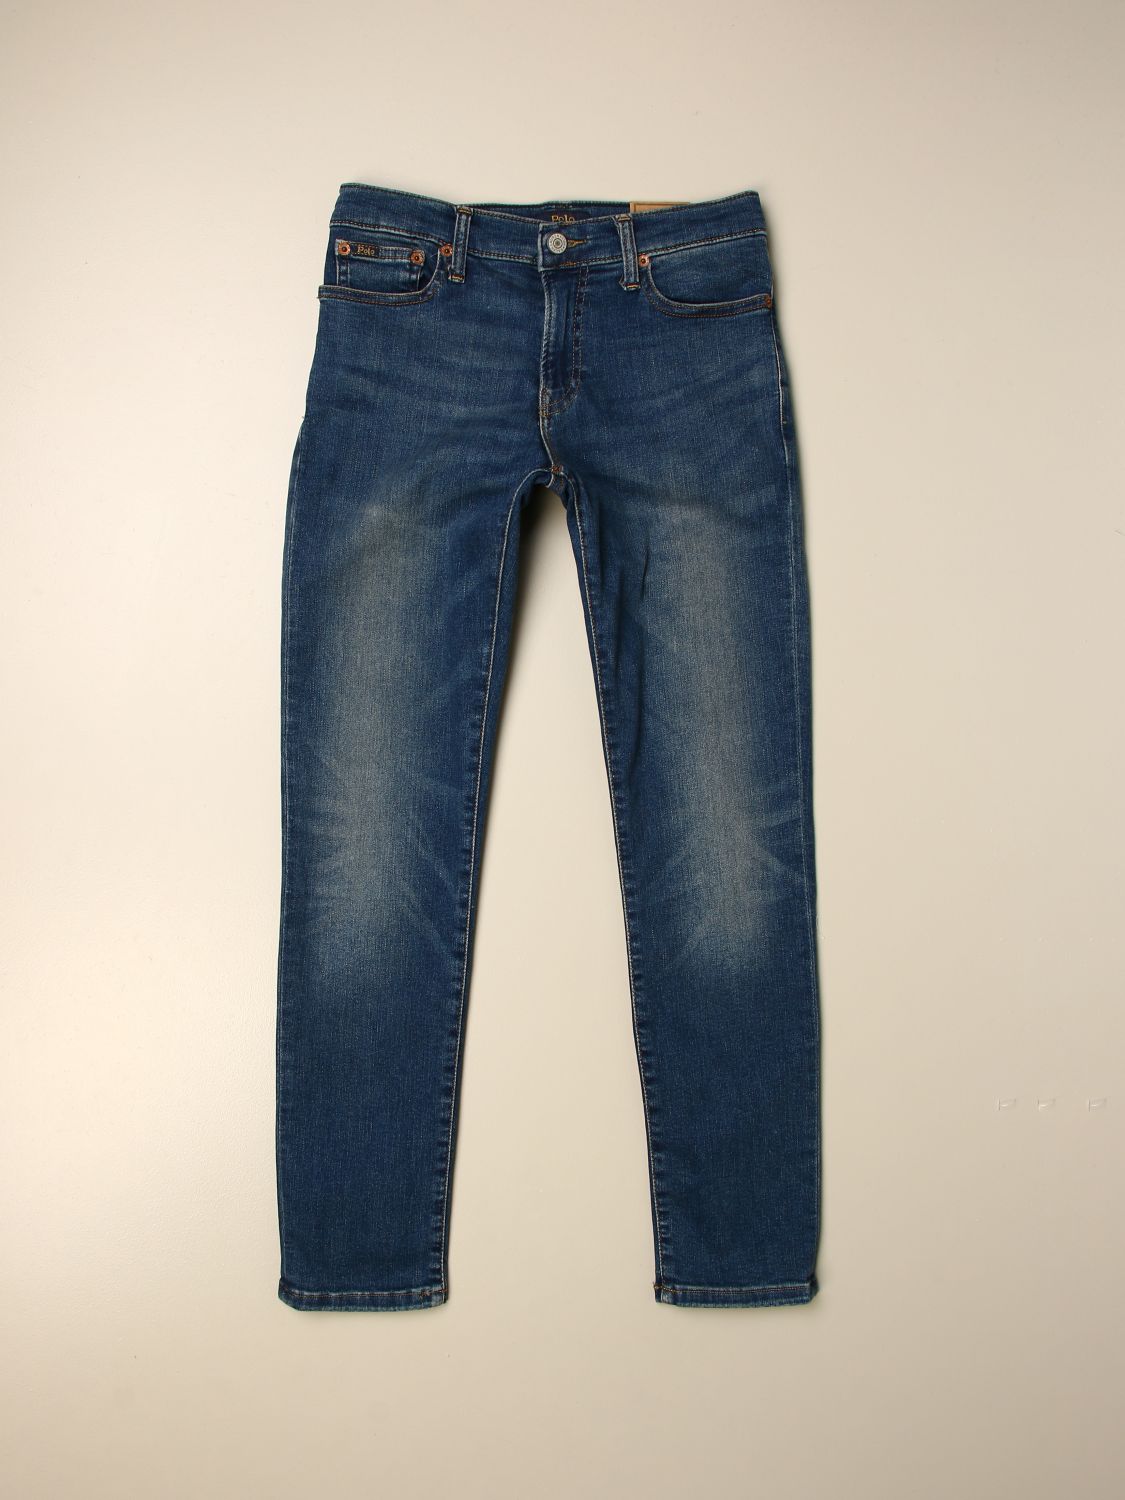 ralph lauren boys jeans